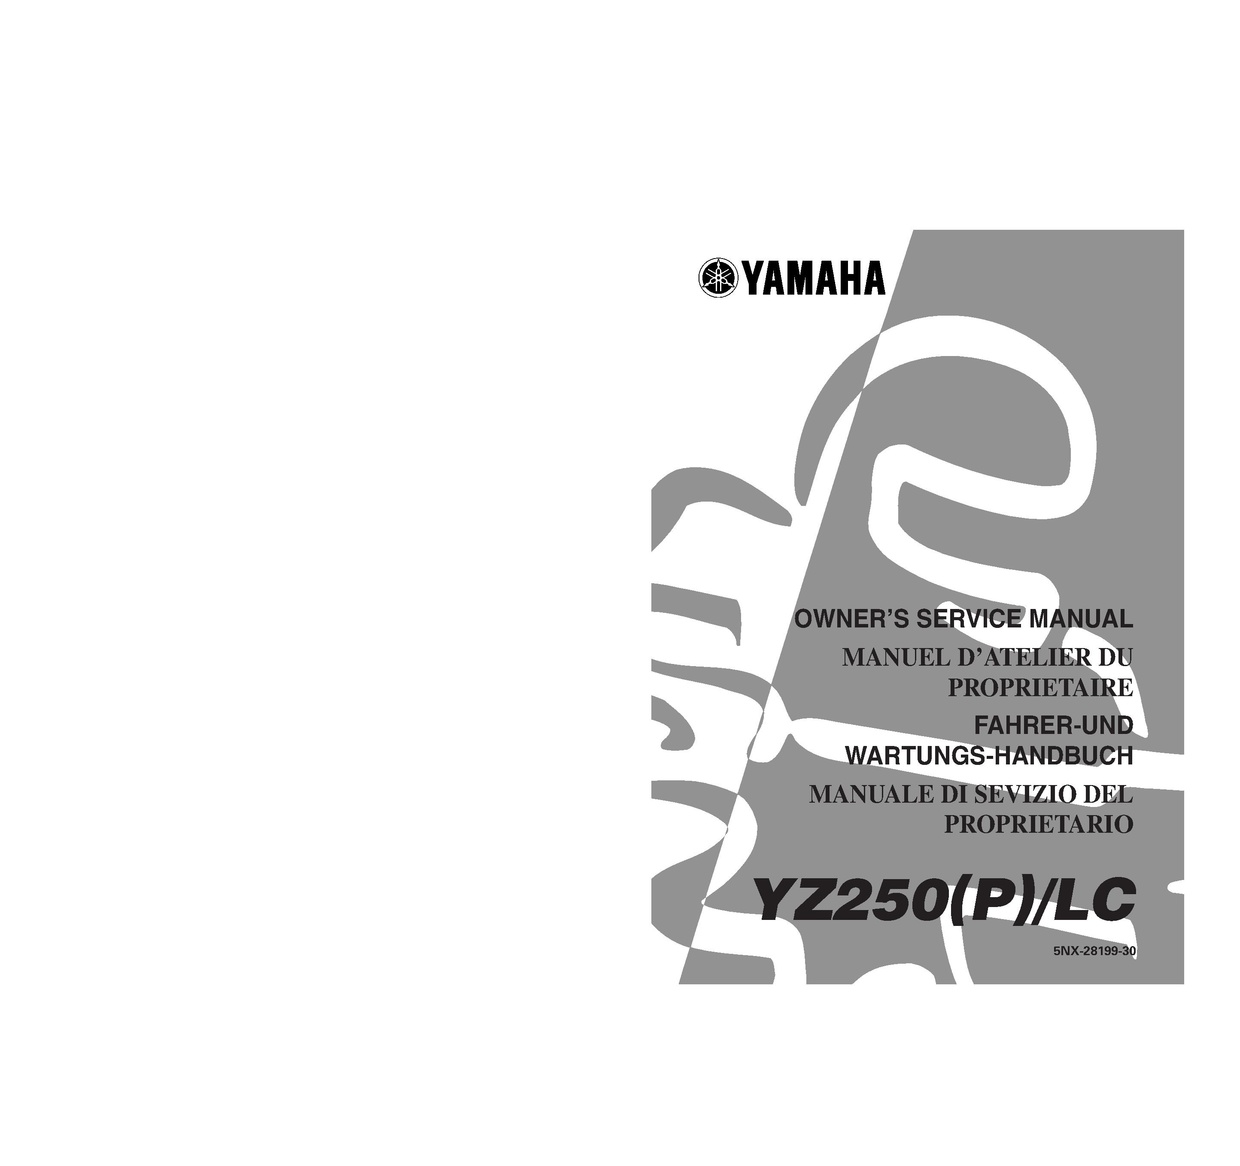 File:2002 Yamaha YZ250 (P) LC Owners Service Manual.pdf